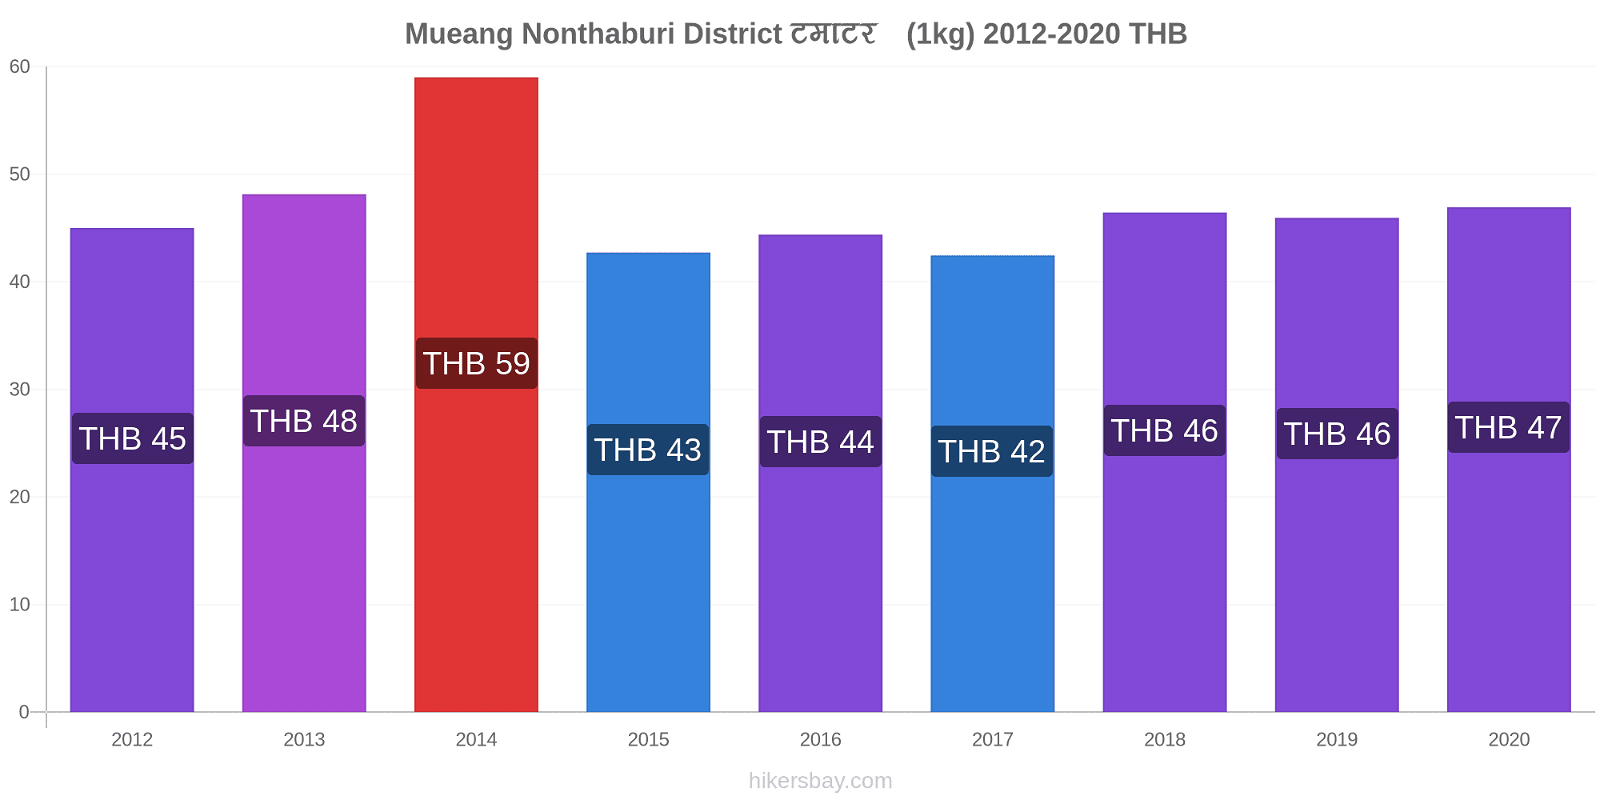 Mueang Nonthaburi District मूल्य परिवर्तन टमाटर (1kg) hikersbay.com